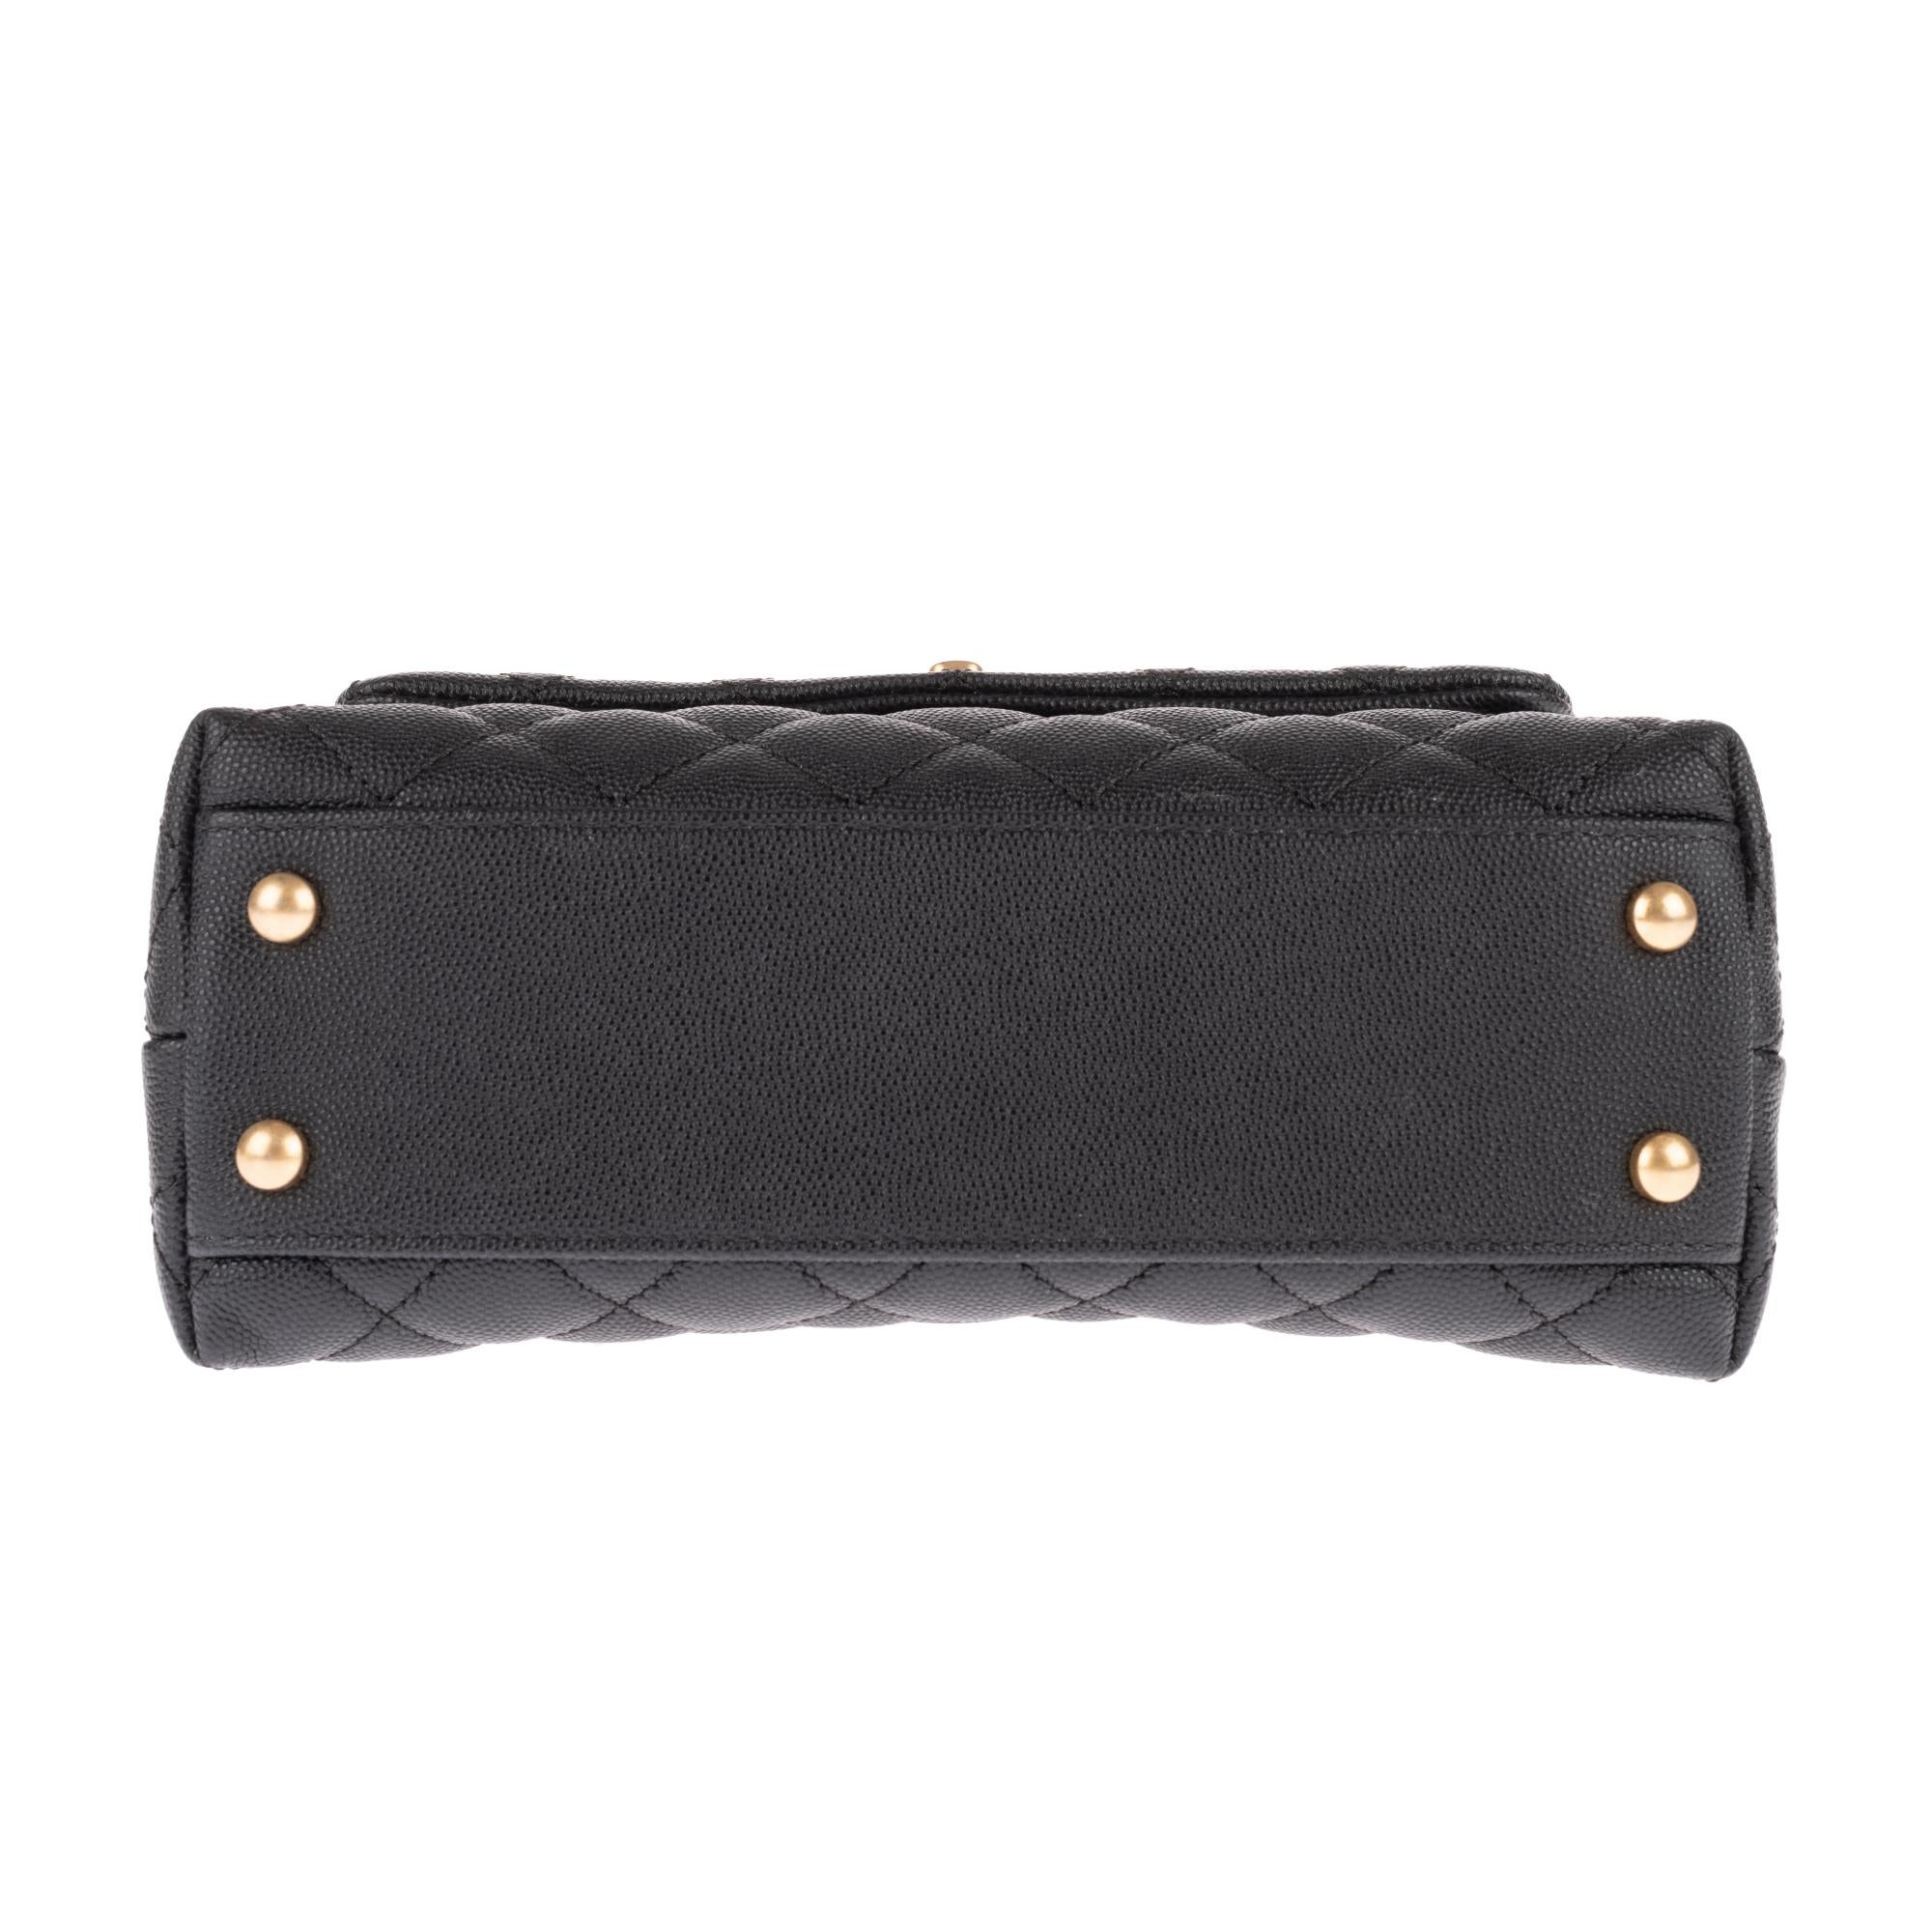 Amazing Chanel Coco handbag in black caviar leather, handle in brown lizard ! 2